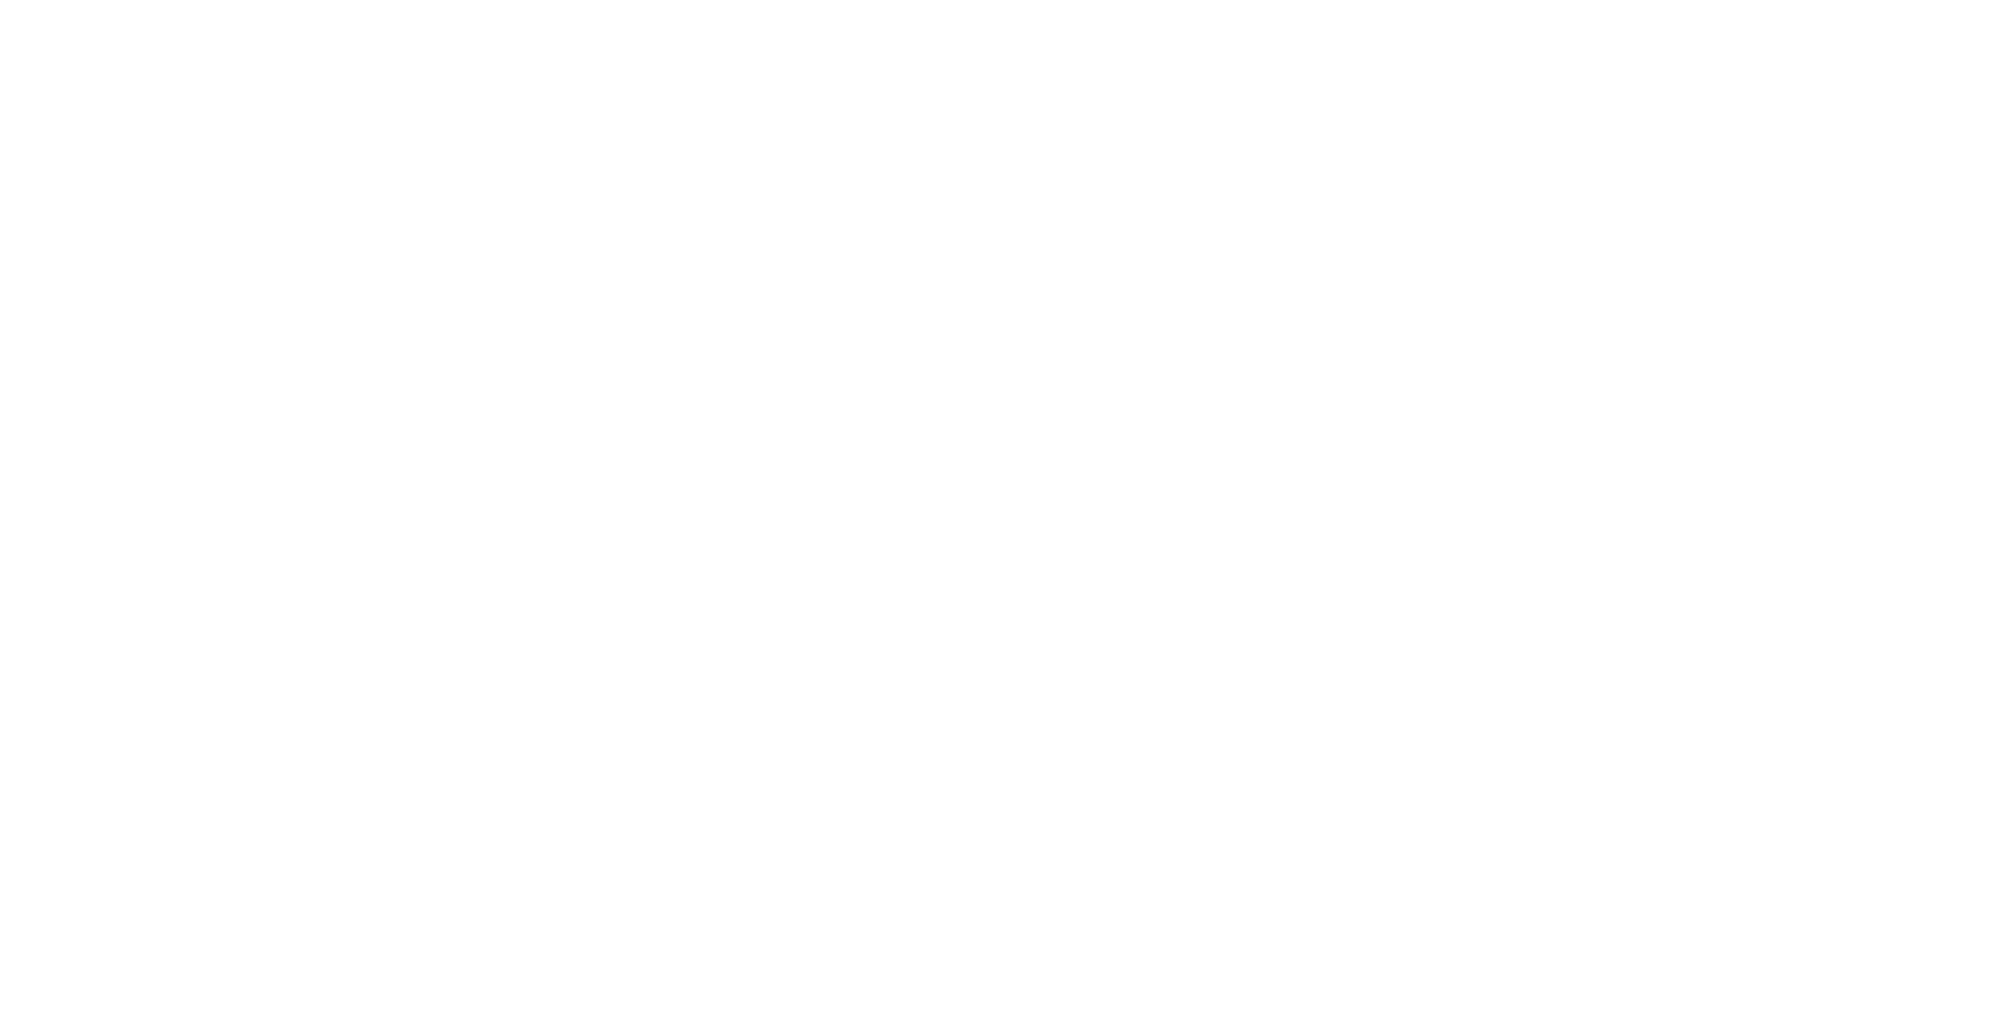 Walk Away Renée